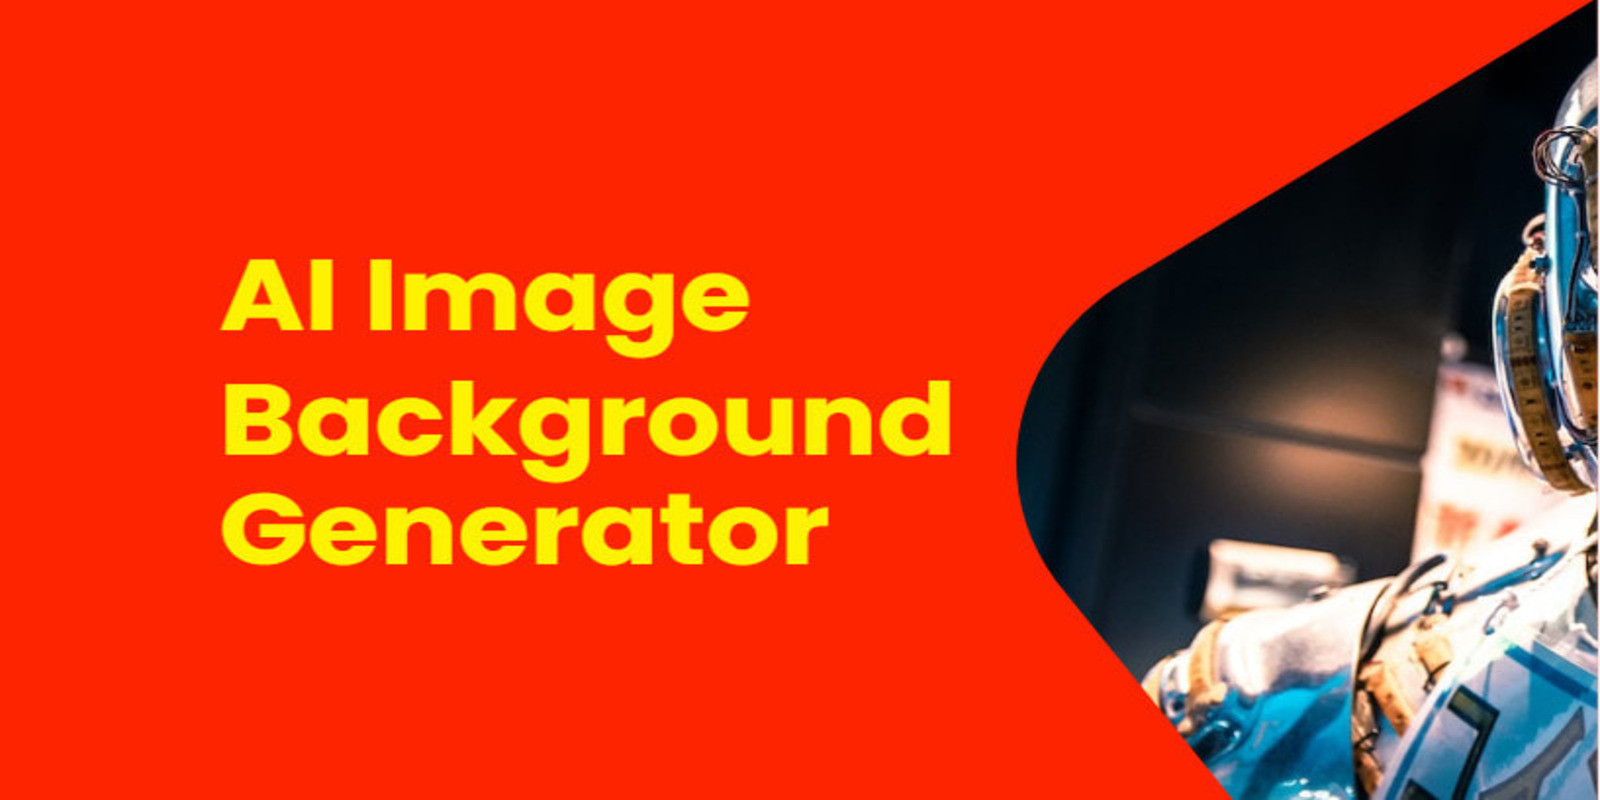 BGAI - AI Powered Image Background Generator